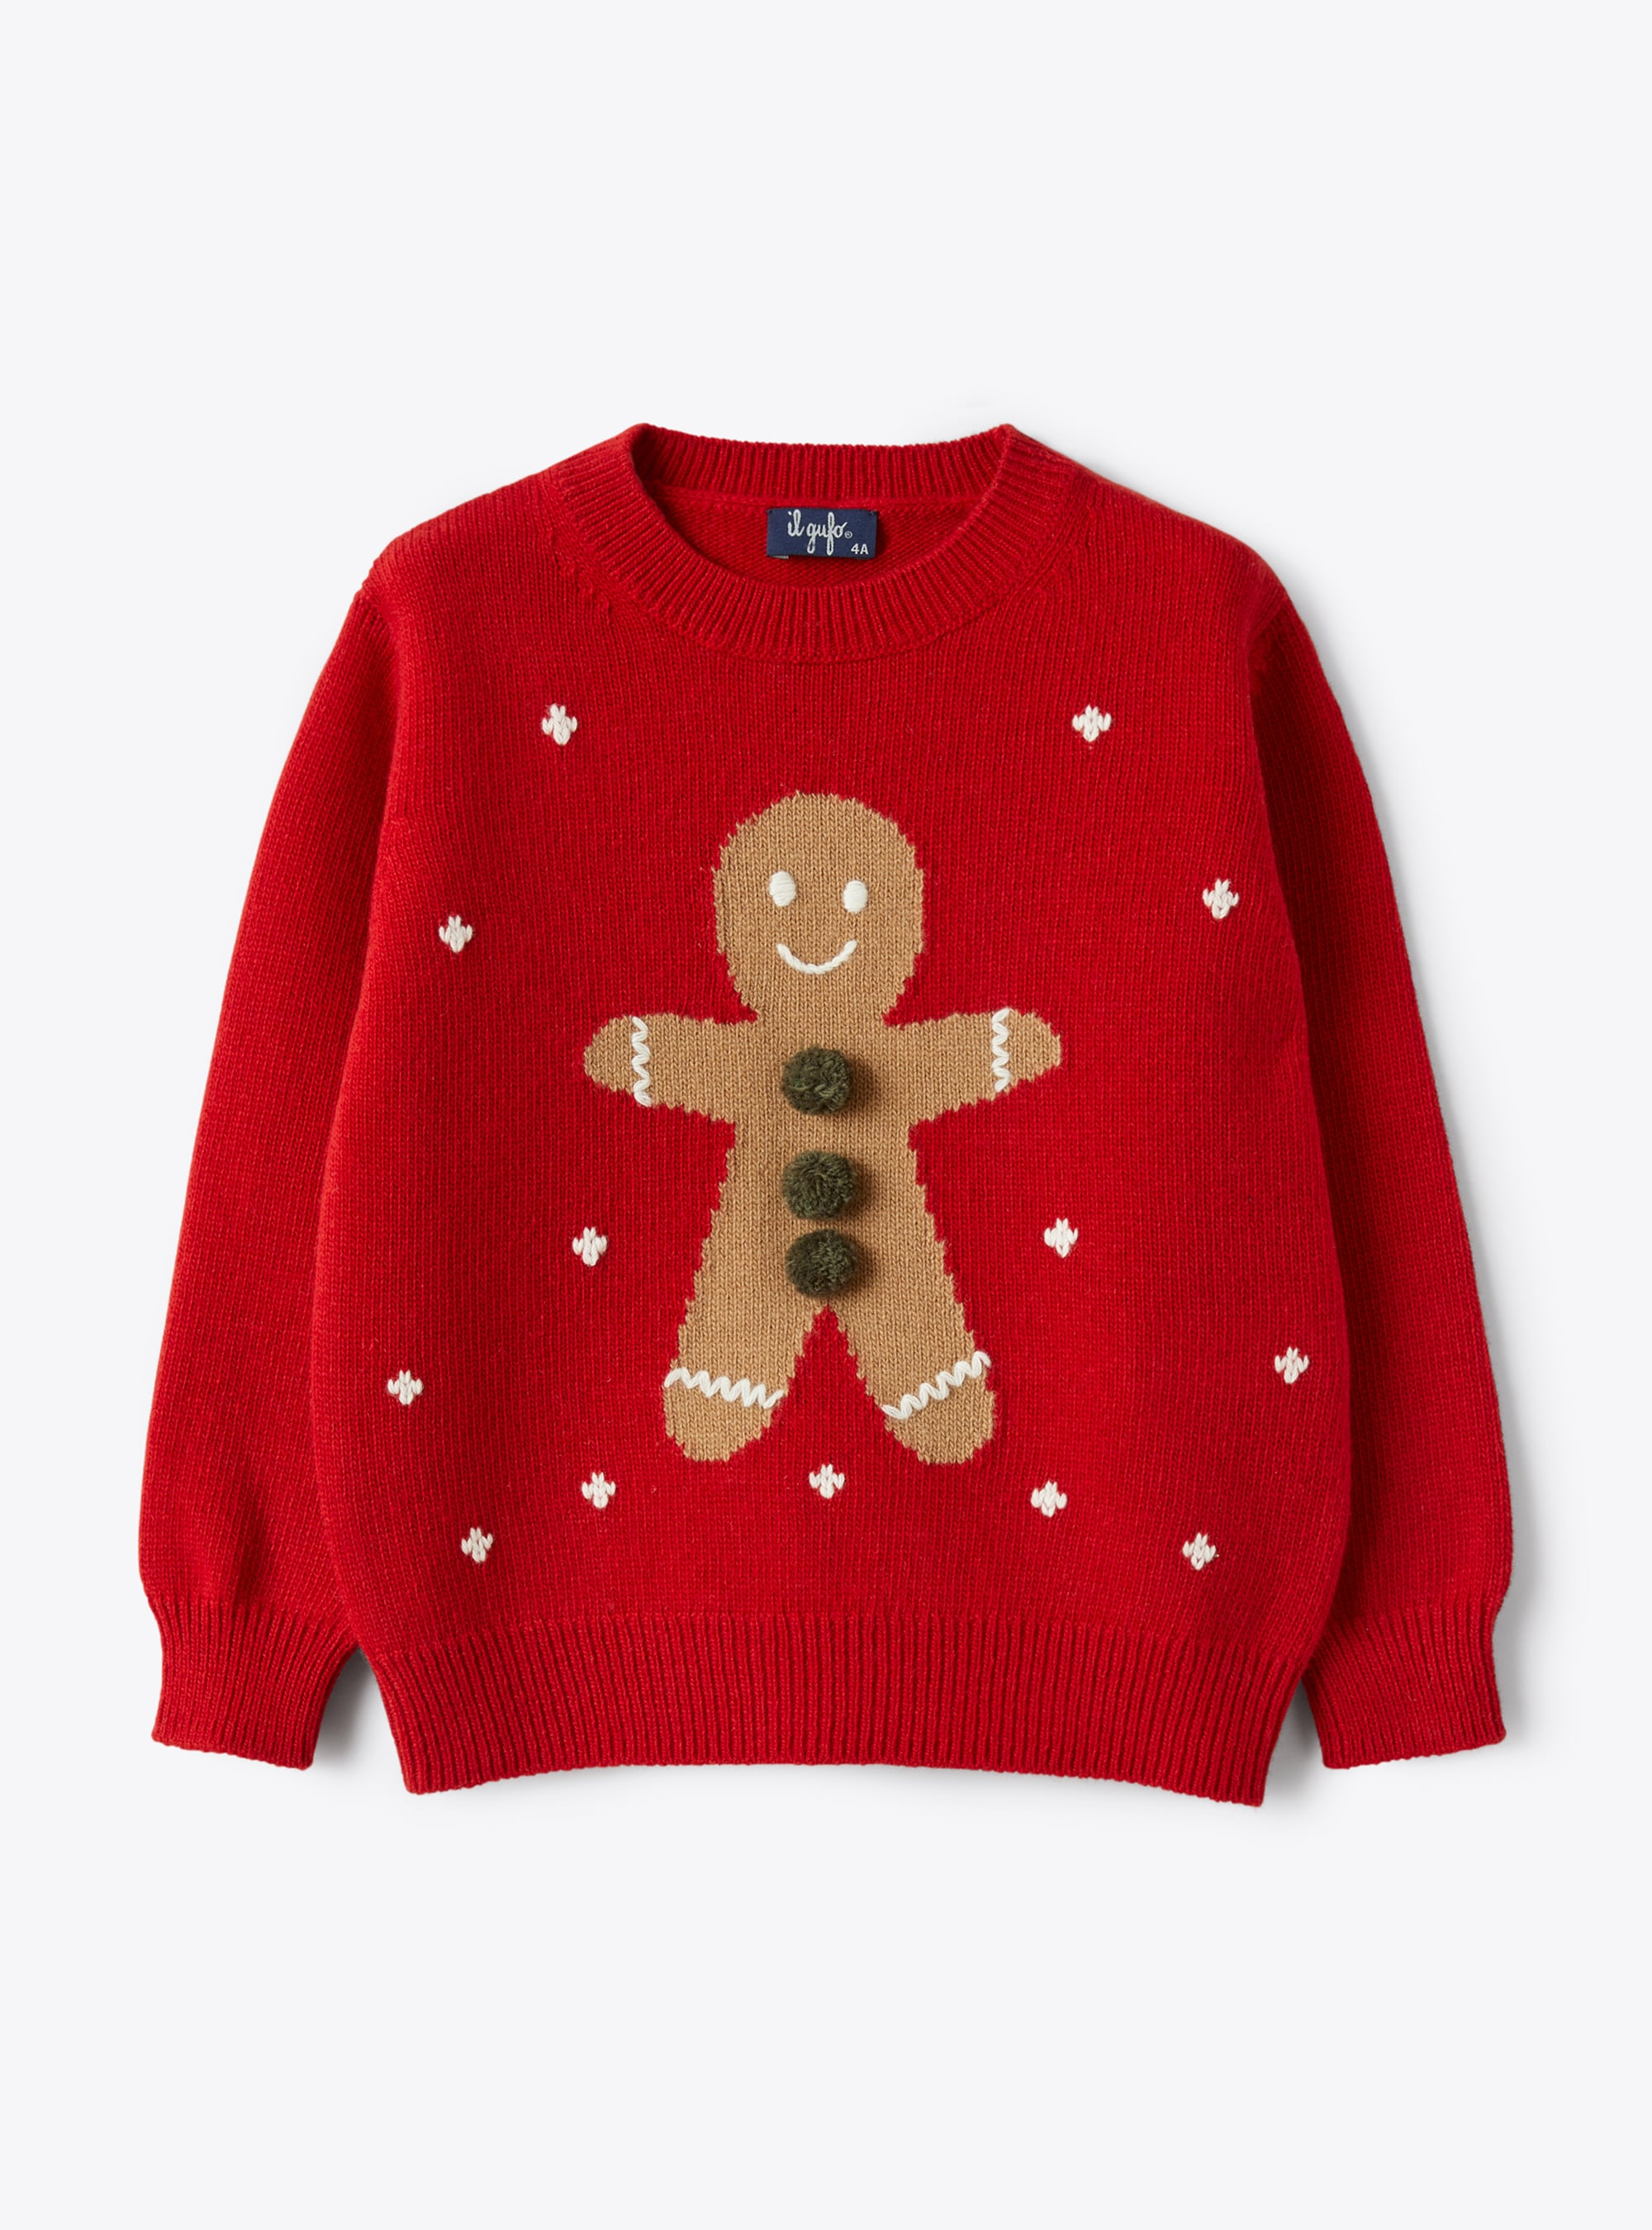 Sweater in red merino wool with gingerbread man - Sweaters - Il Gufo